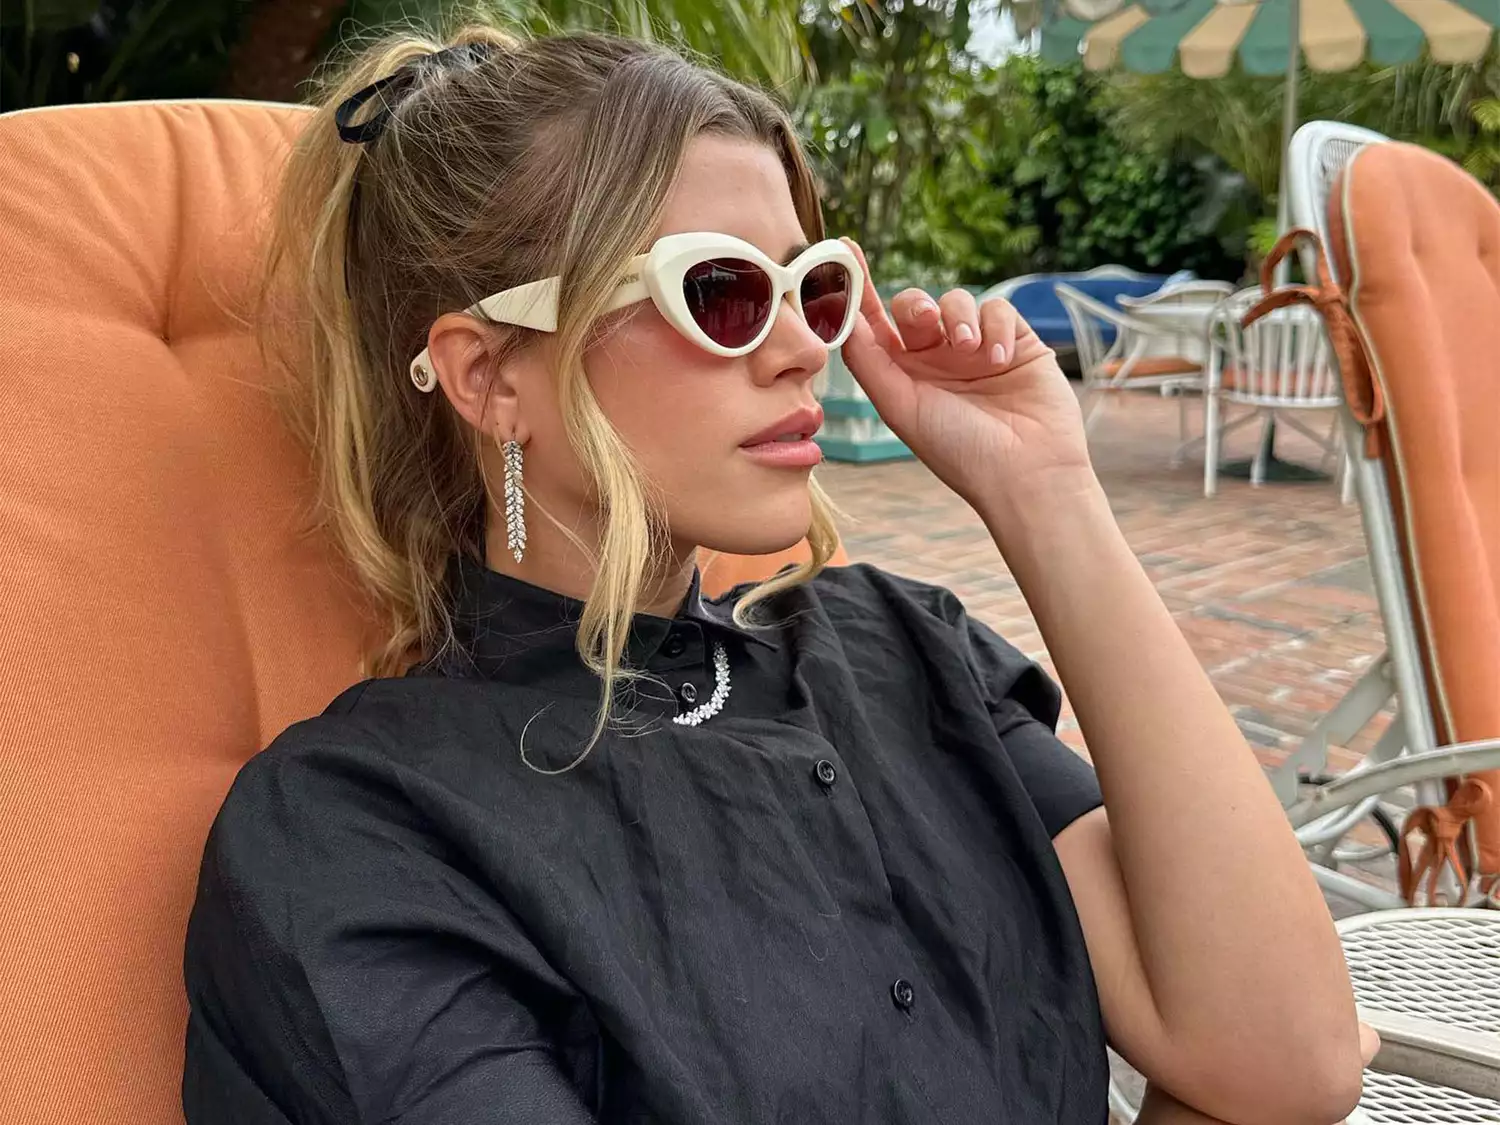 Sofia Richie Grainge wearing sunglasses by the pool